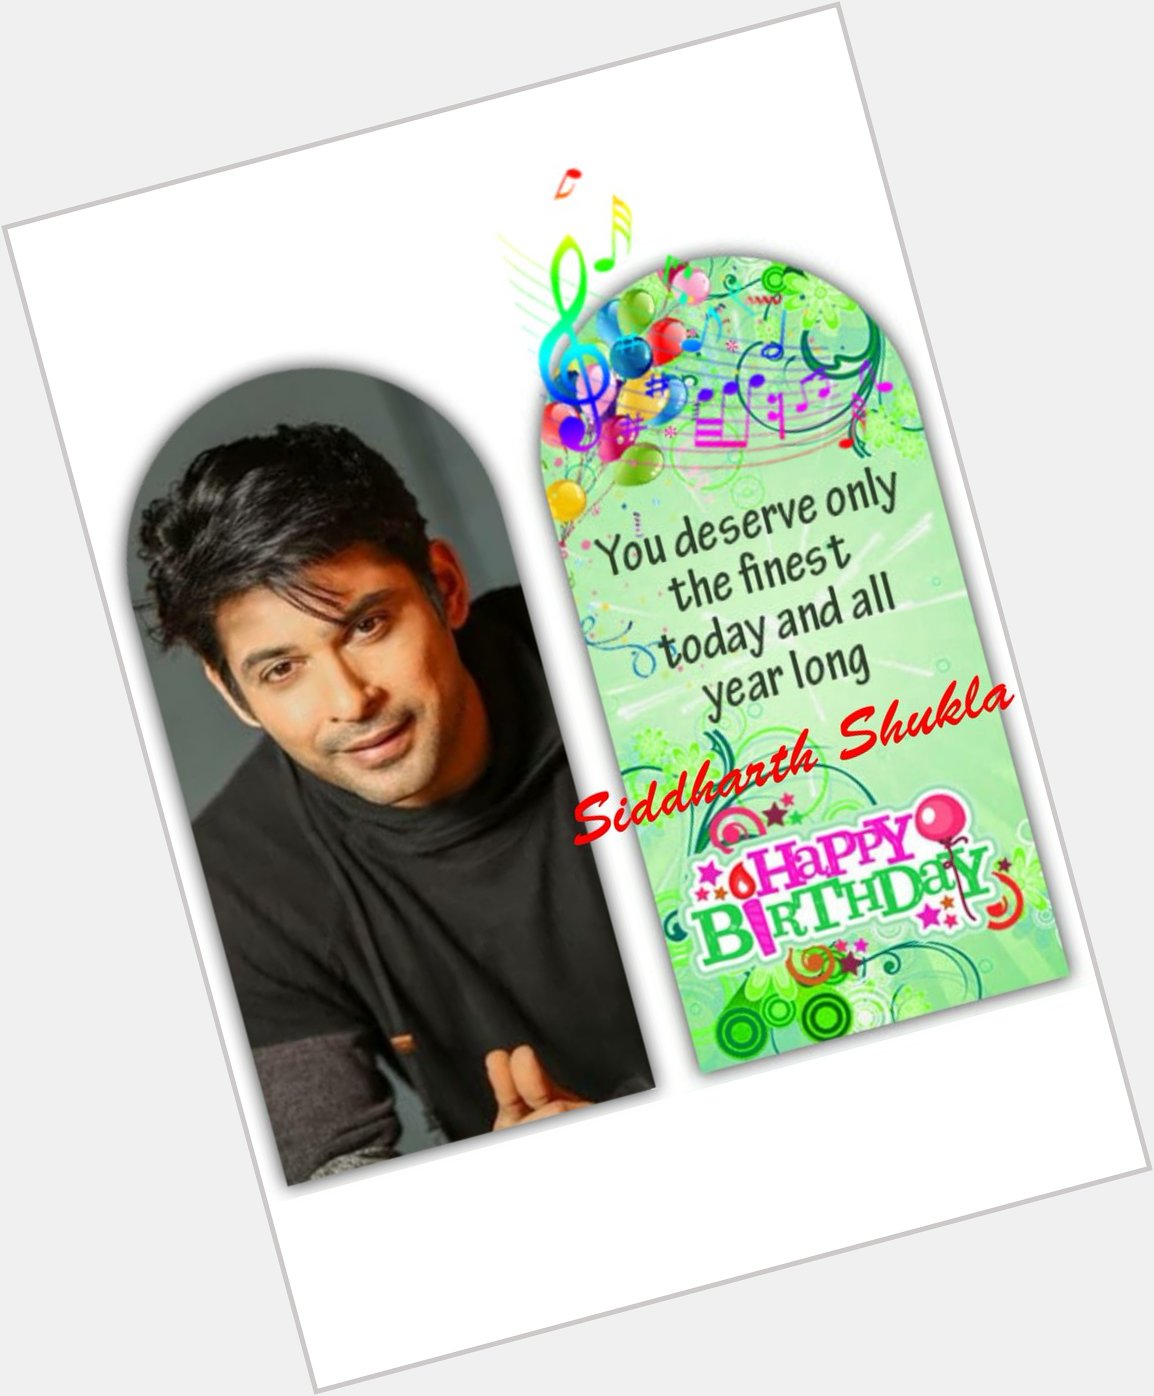 Amazing personality. 

Siddharth Shukla winning hearts of million 

Happy Birthday 